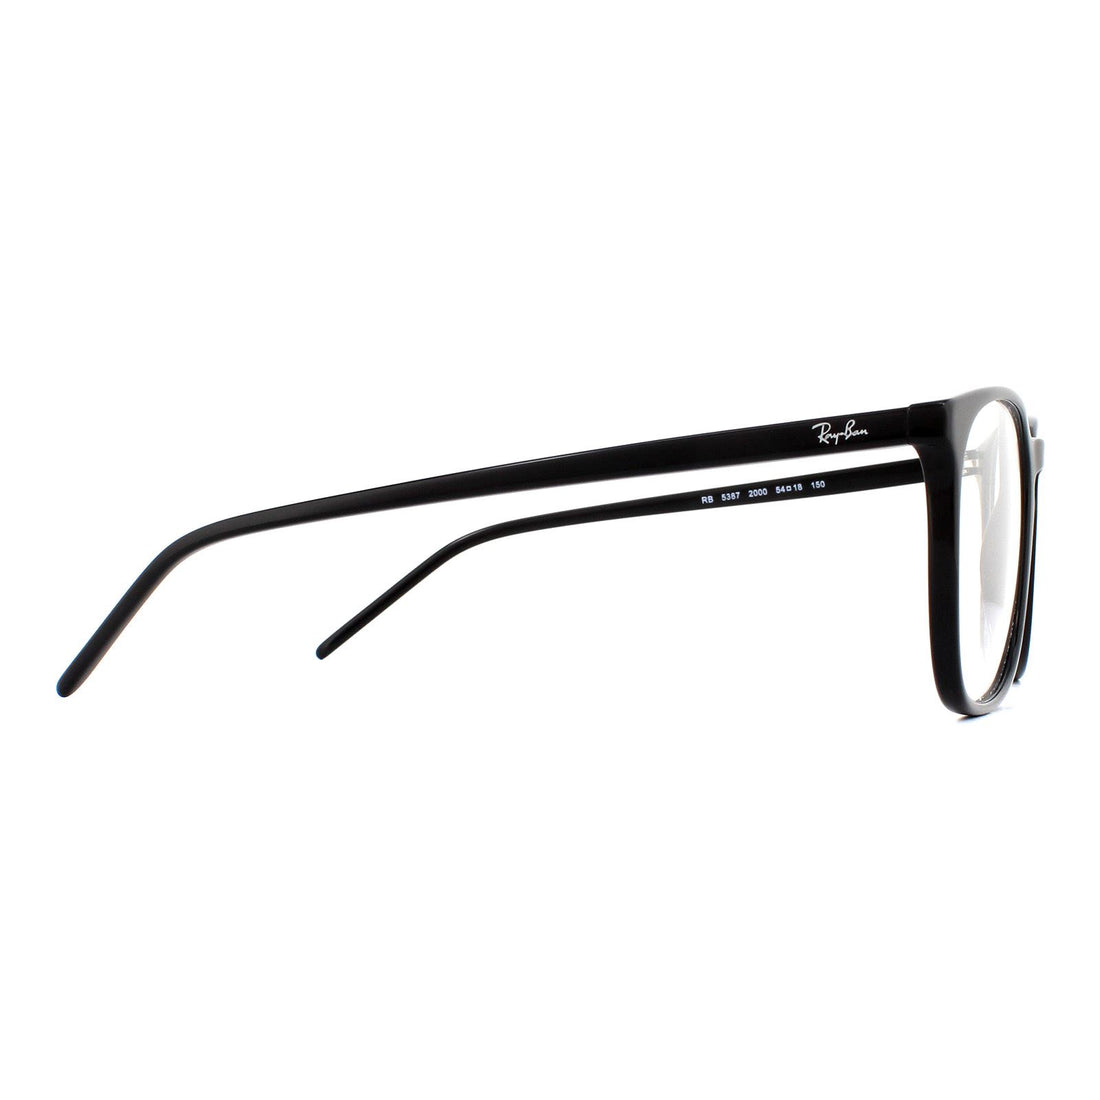 Ray-Ban Glasses Frames RB5387 2000 Black 54mm